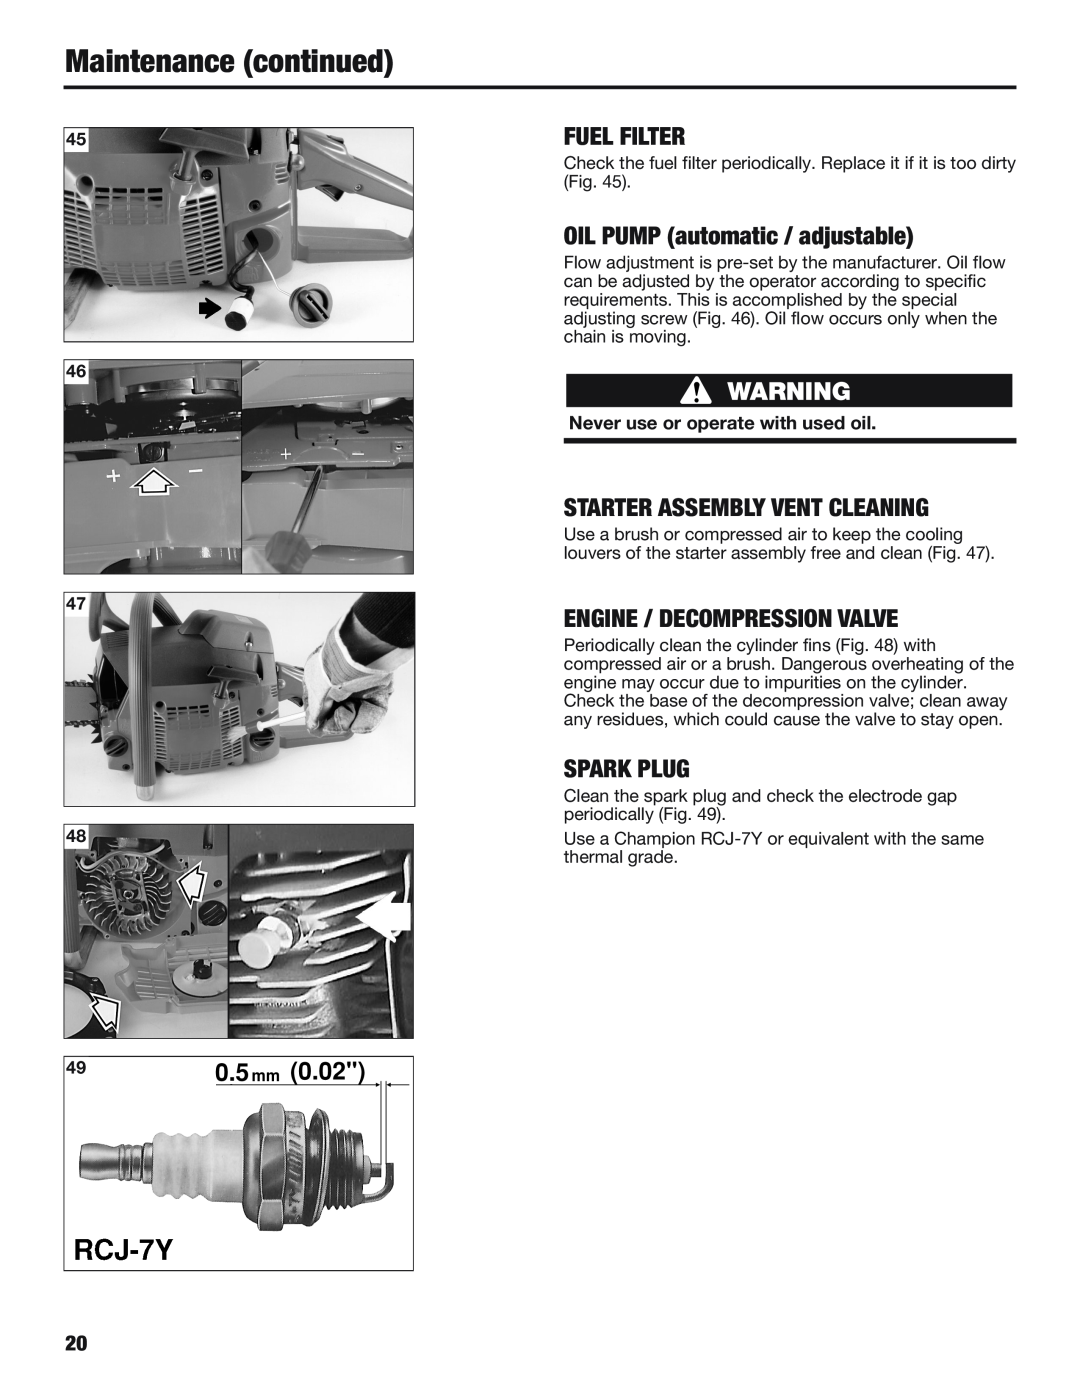 Cub Cadet CS5720 Fuel Filter, OIL PUMP automatic / adjustable, Starter Assembly Vent Cleaning, Spark Plug, 45 46 47 48 